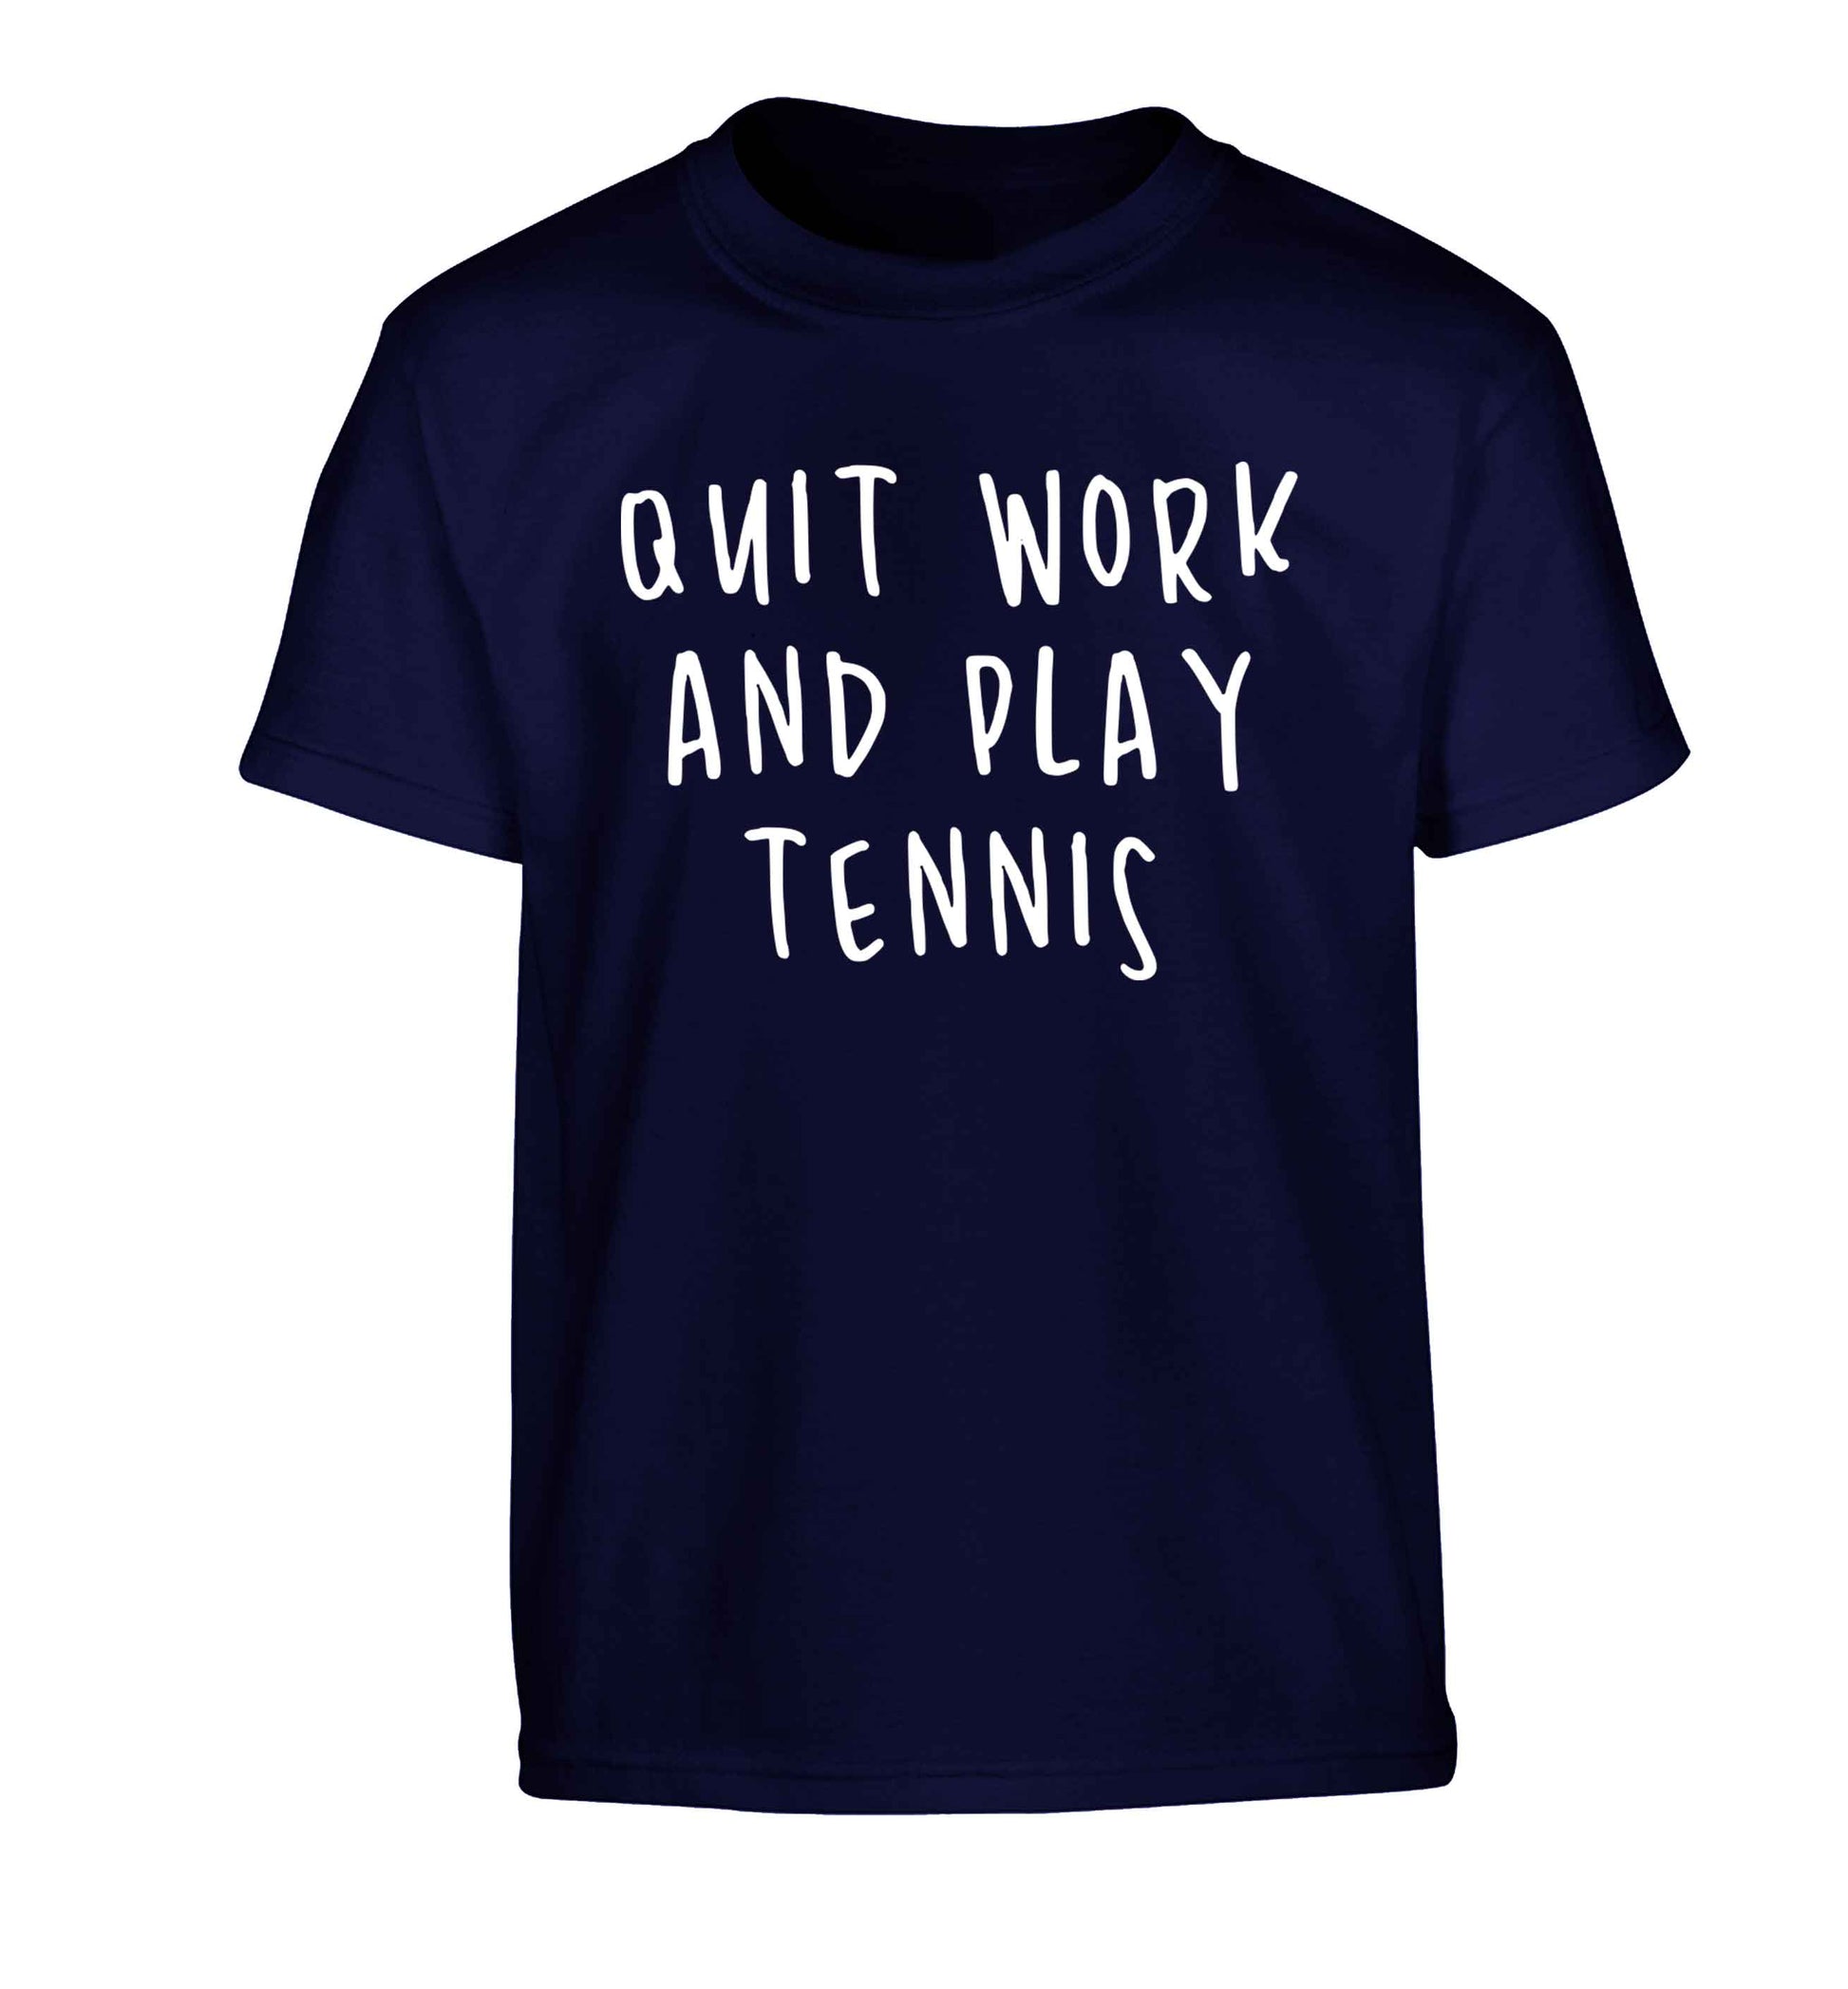 Quit work and play tennis Children's navy Tshirt 12-13 Years